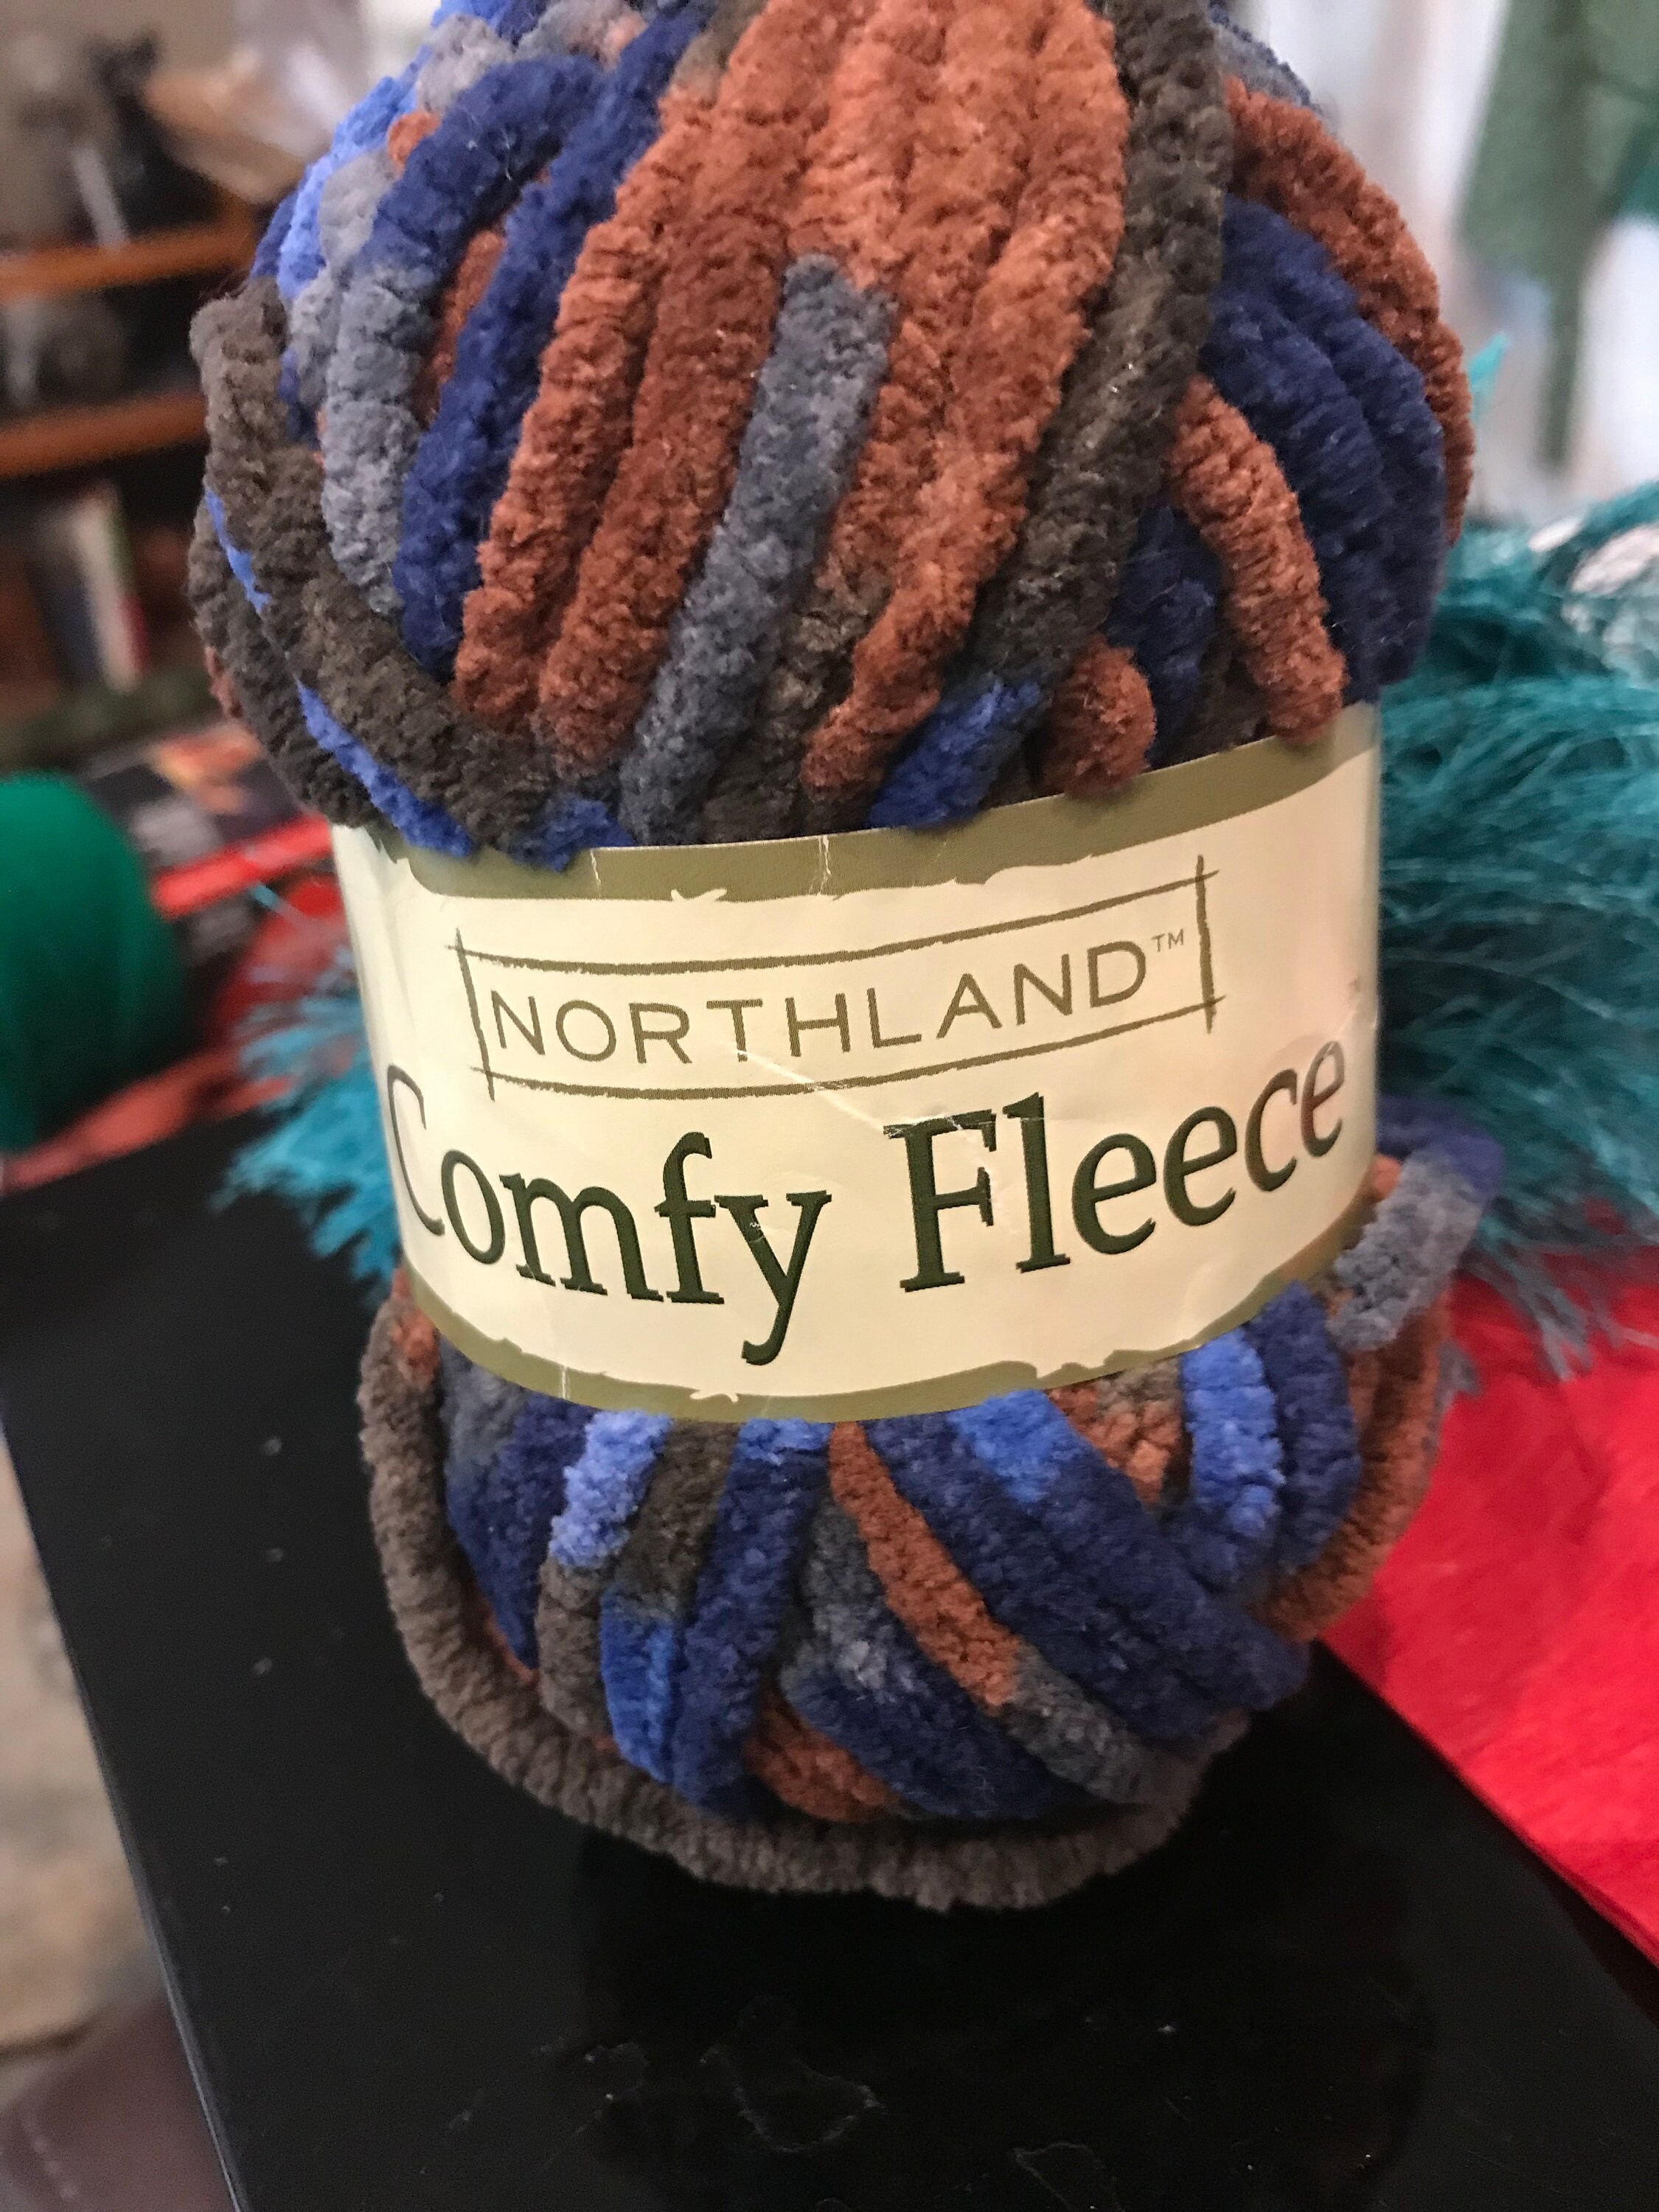 Northland Comfy Fleece Yarn